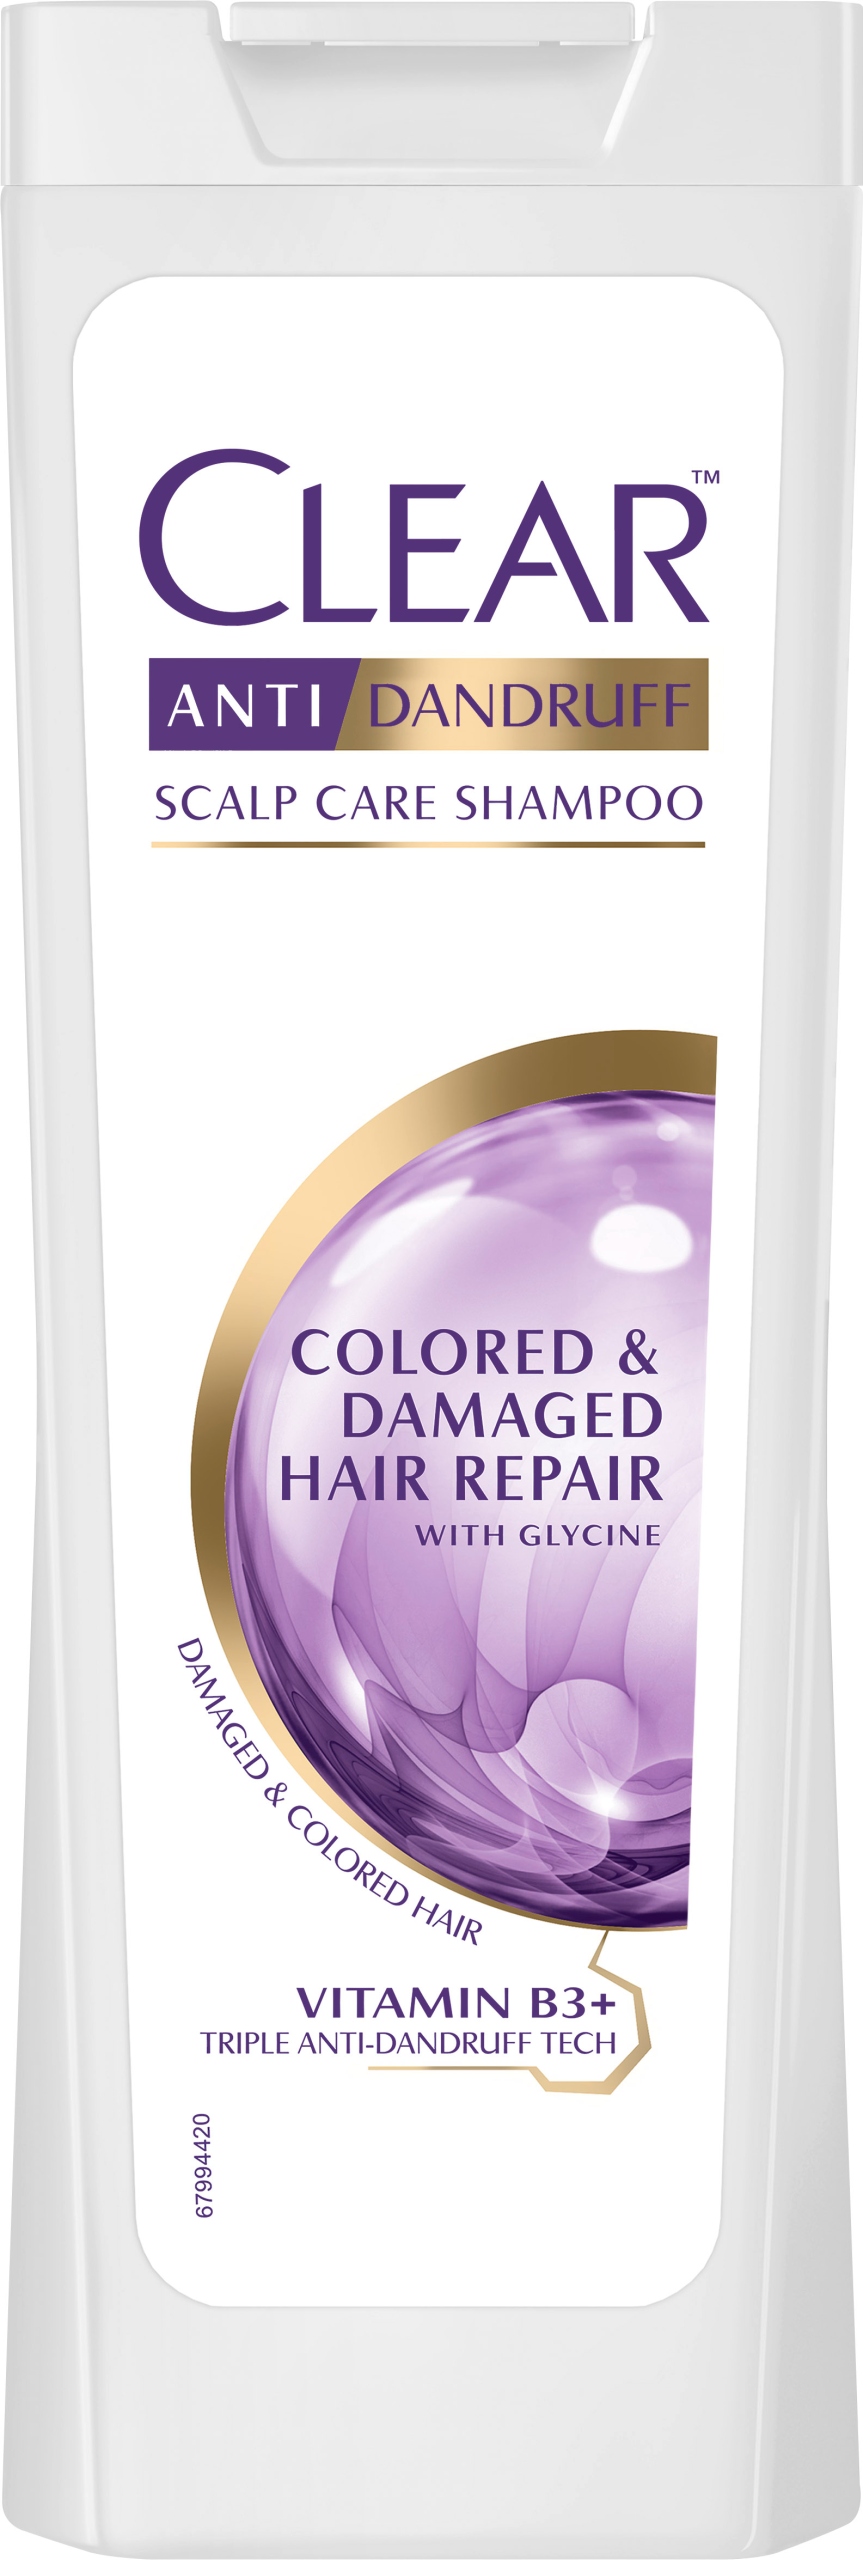 clear damaged & colored hair repair szampon przeciwłupieżowy 400ml